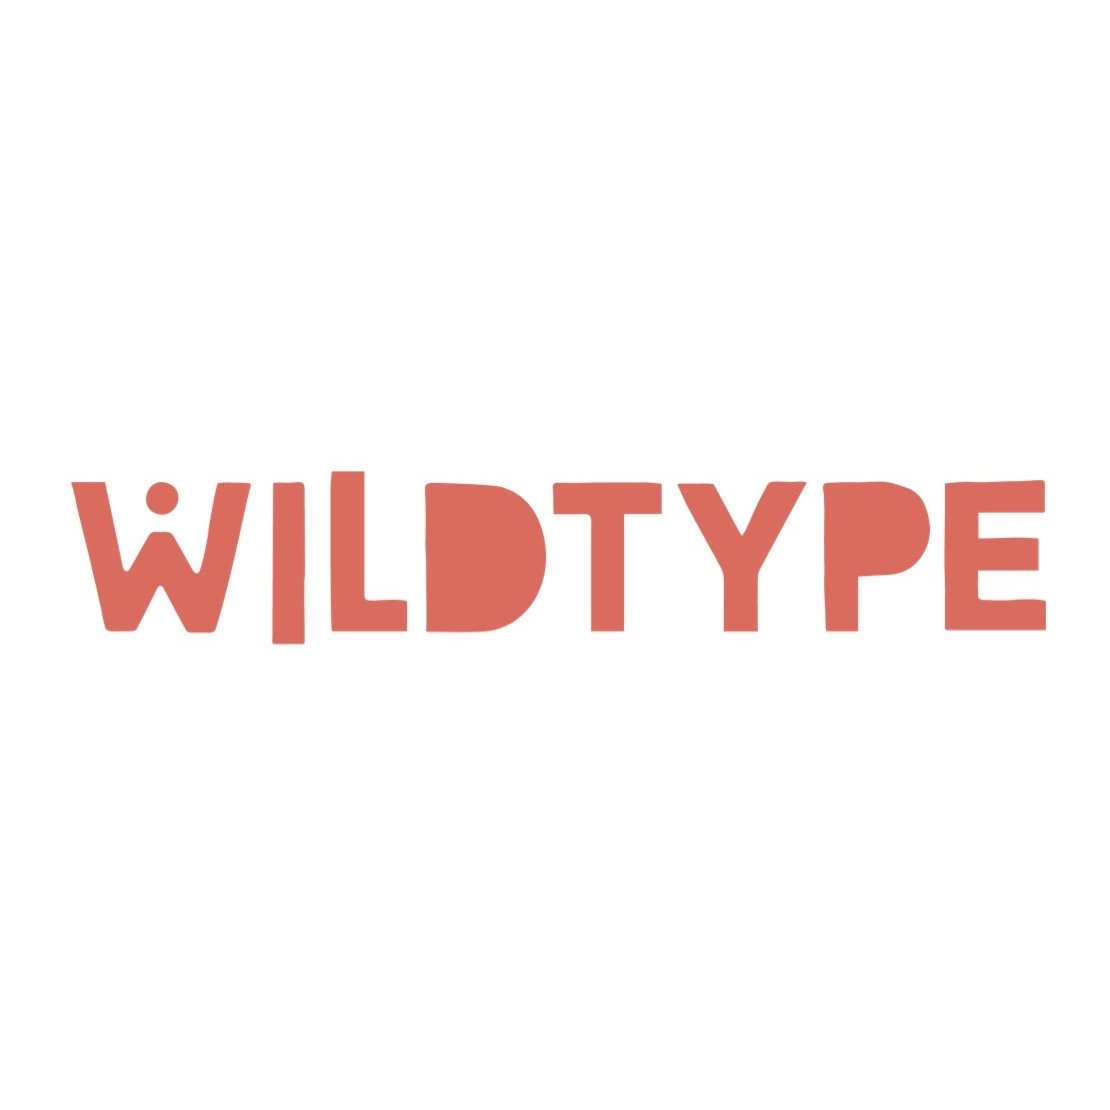 Wildtype square.jpg